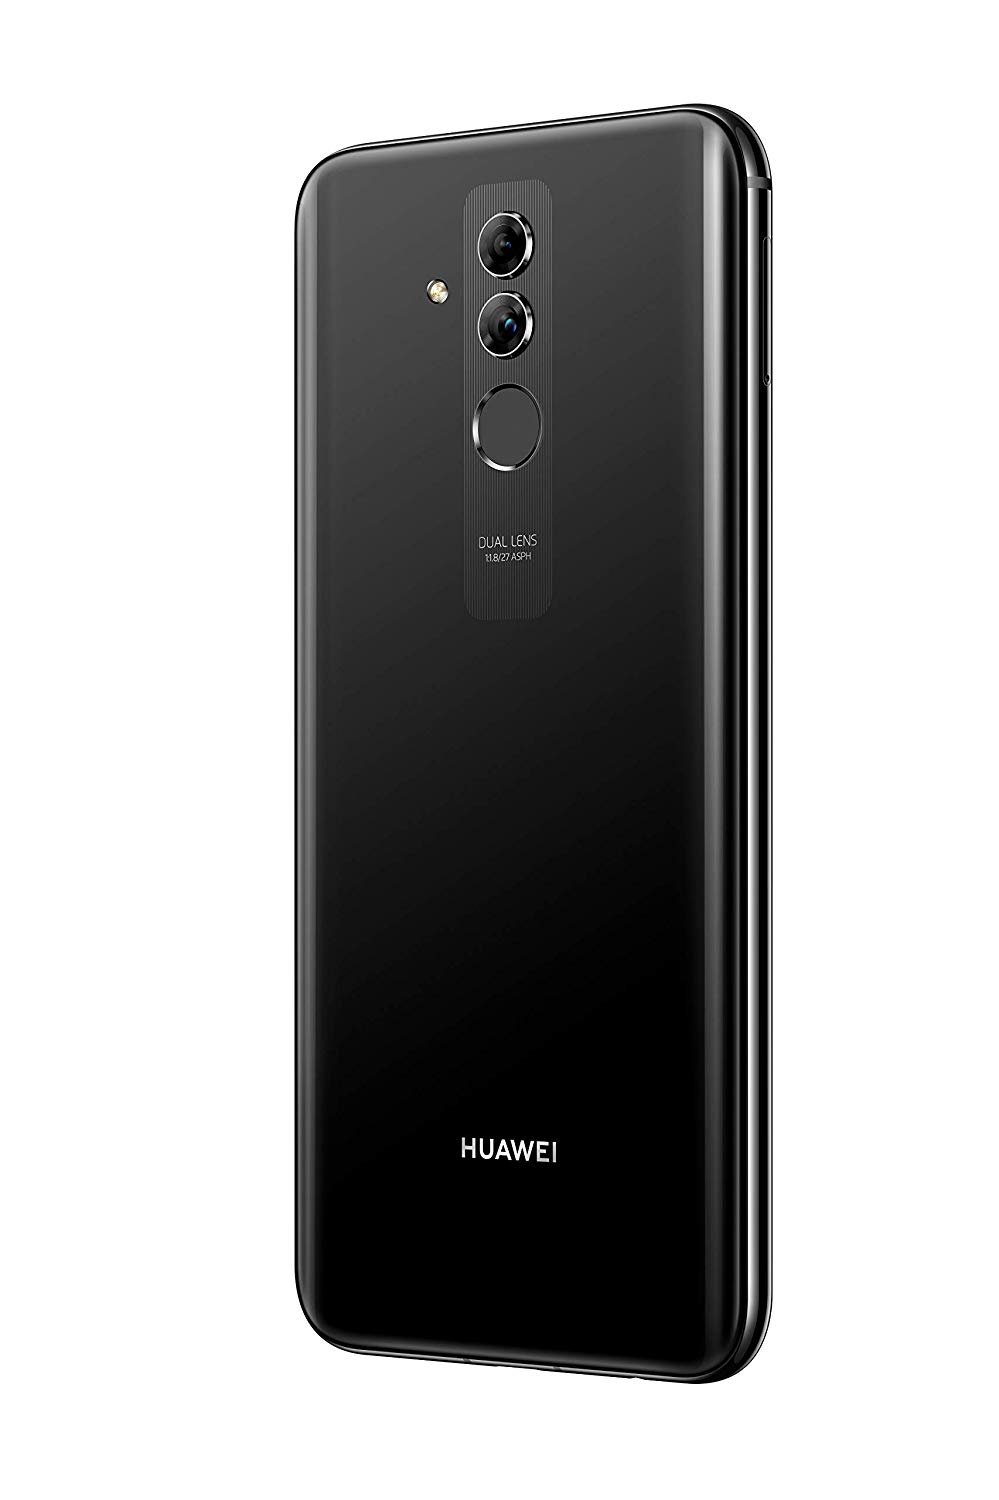 plek Spectaculair Rechtdoor Huawei Mate 20 Lite specs, review, release date - PhonesData